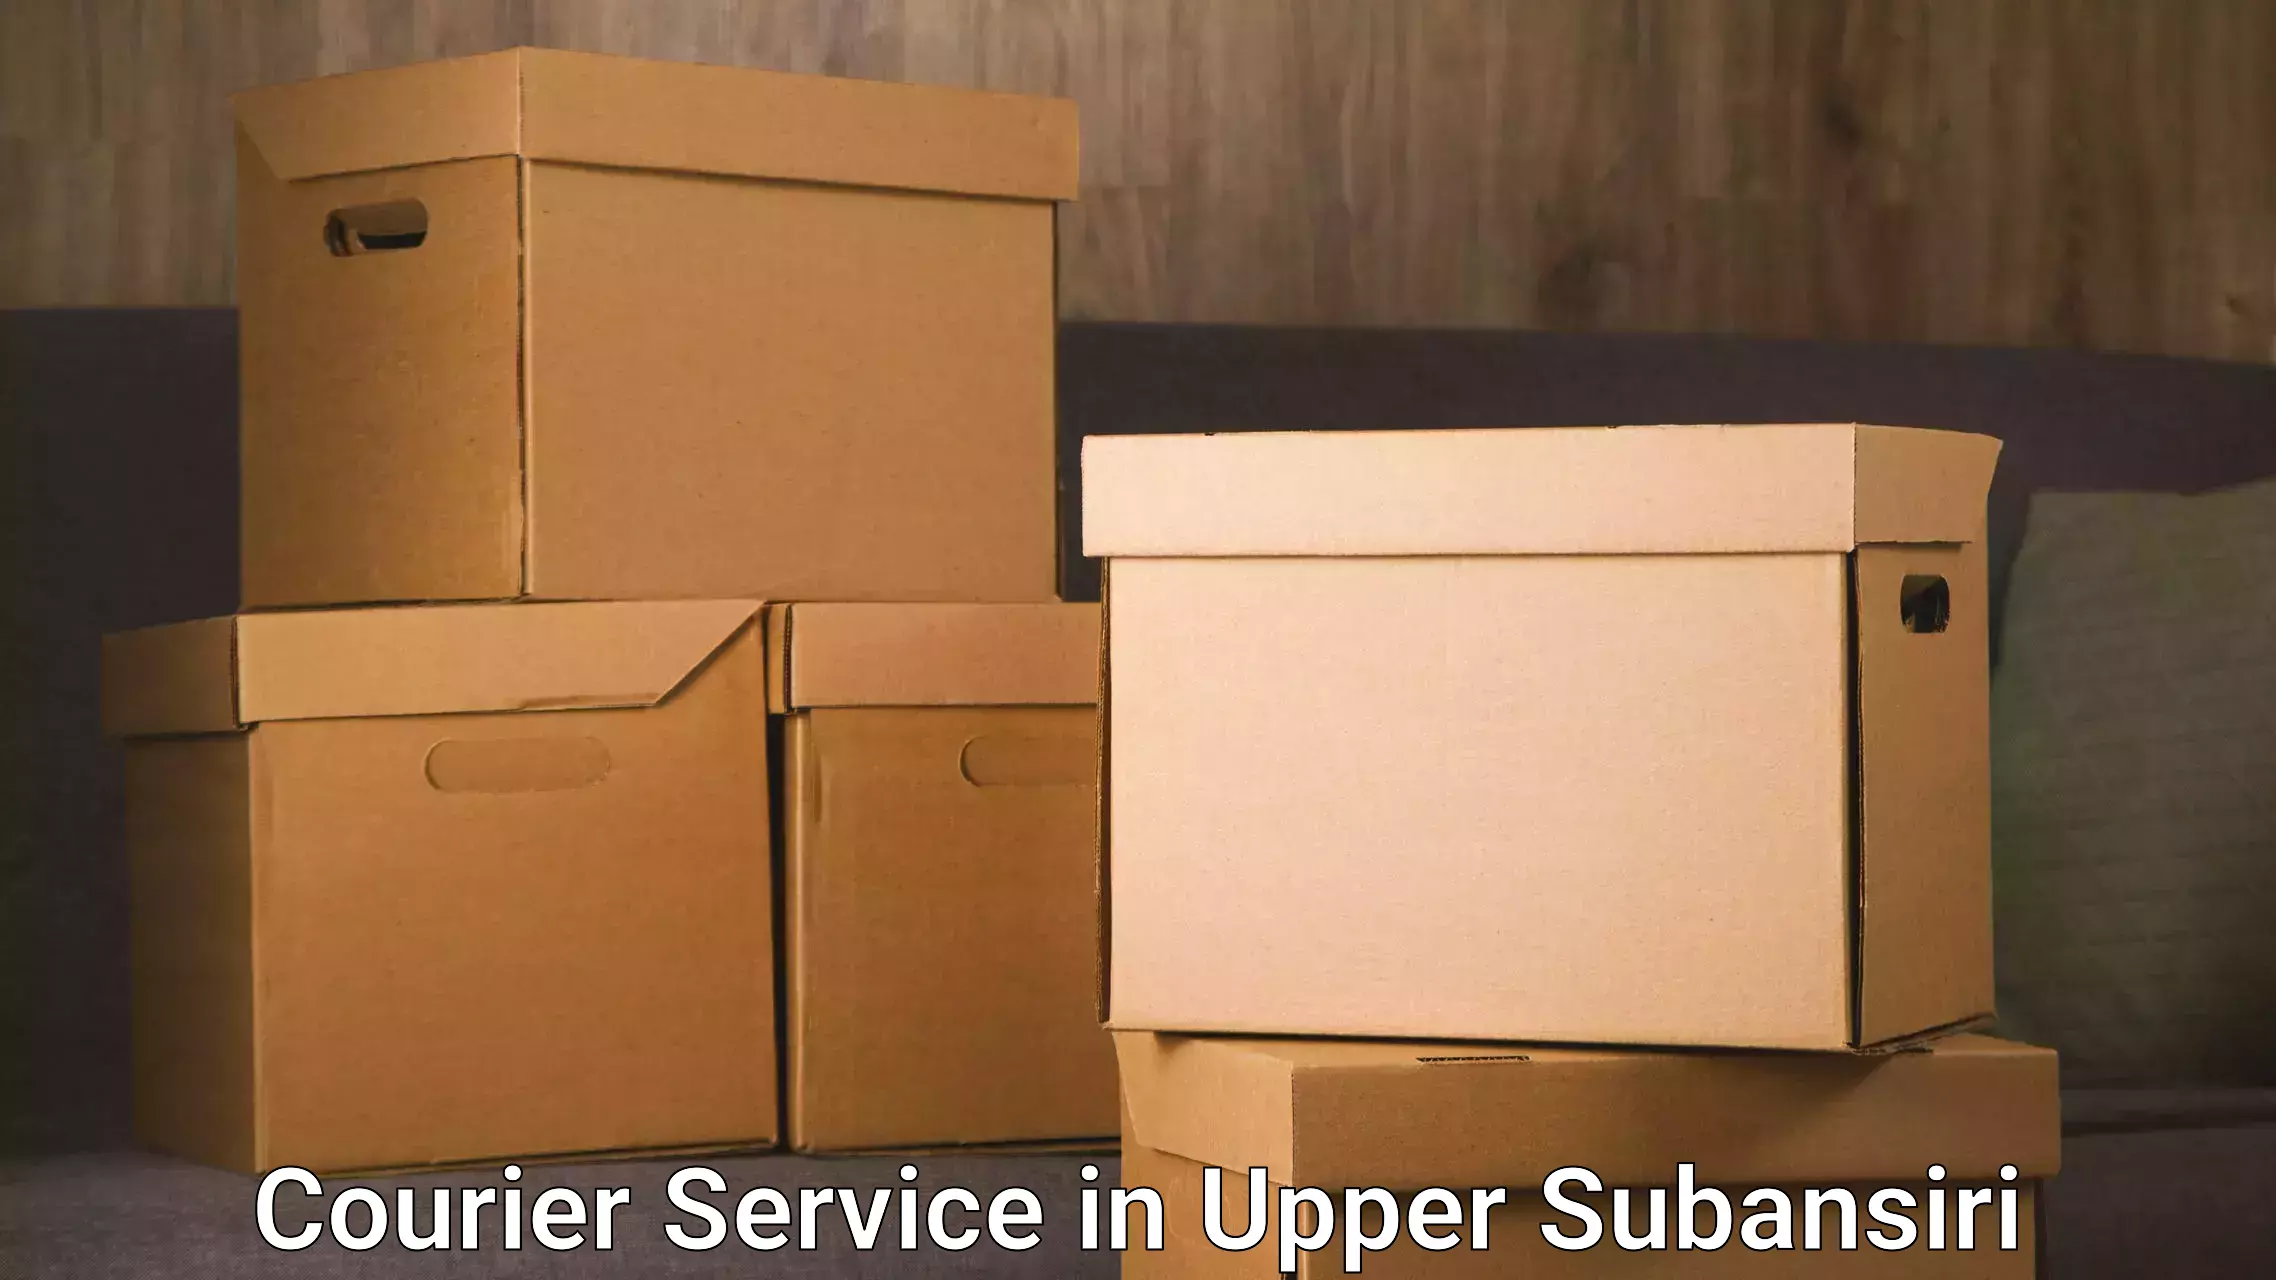 Emergency parcel delivery in Upper Subansiri